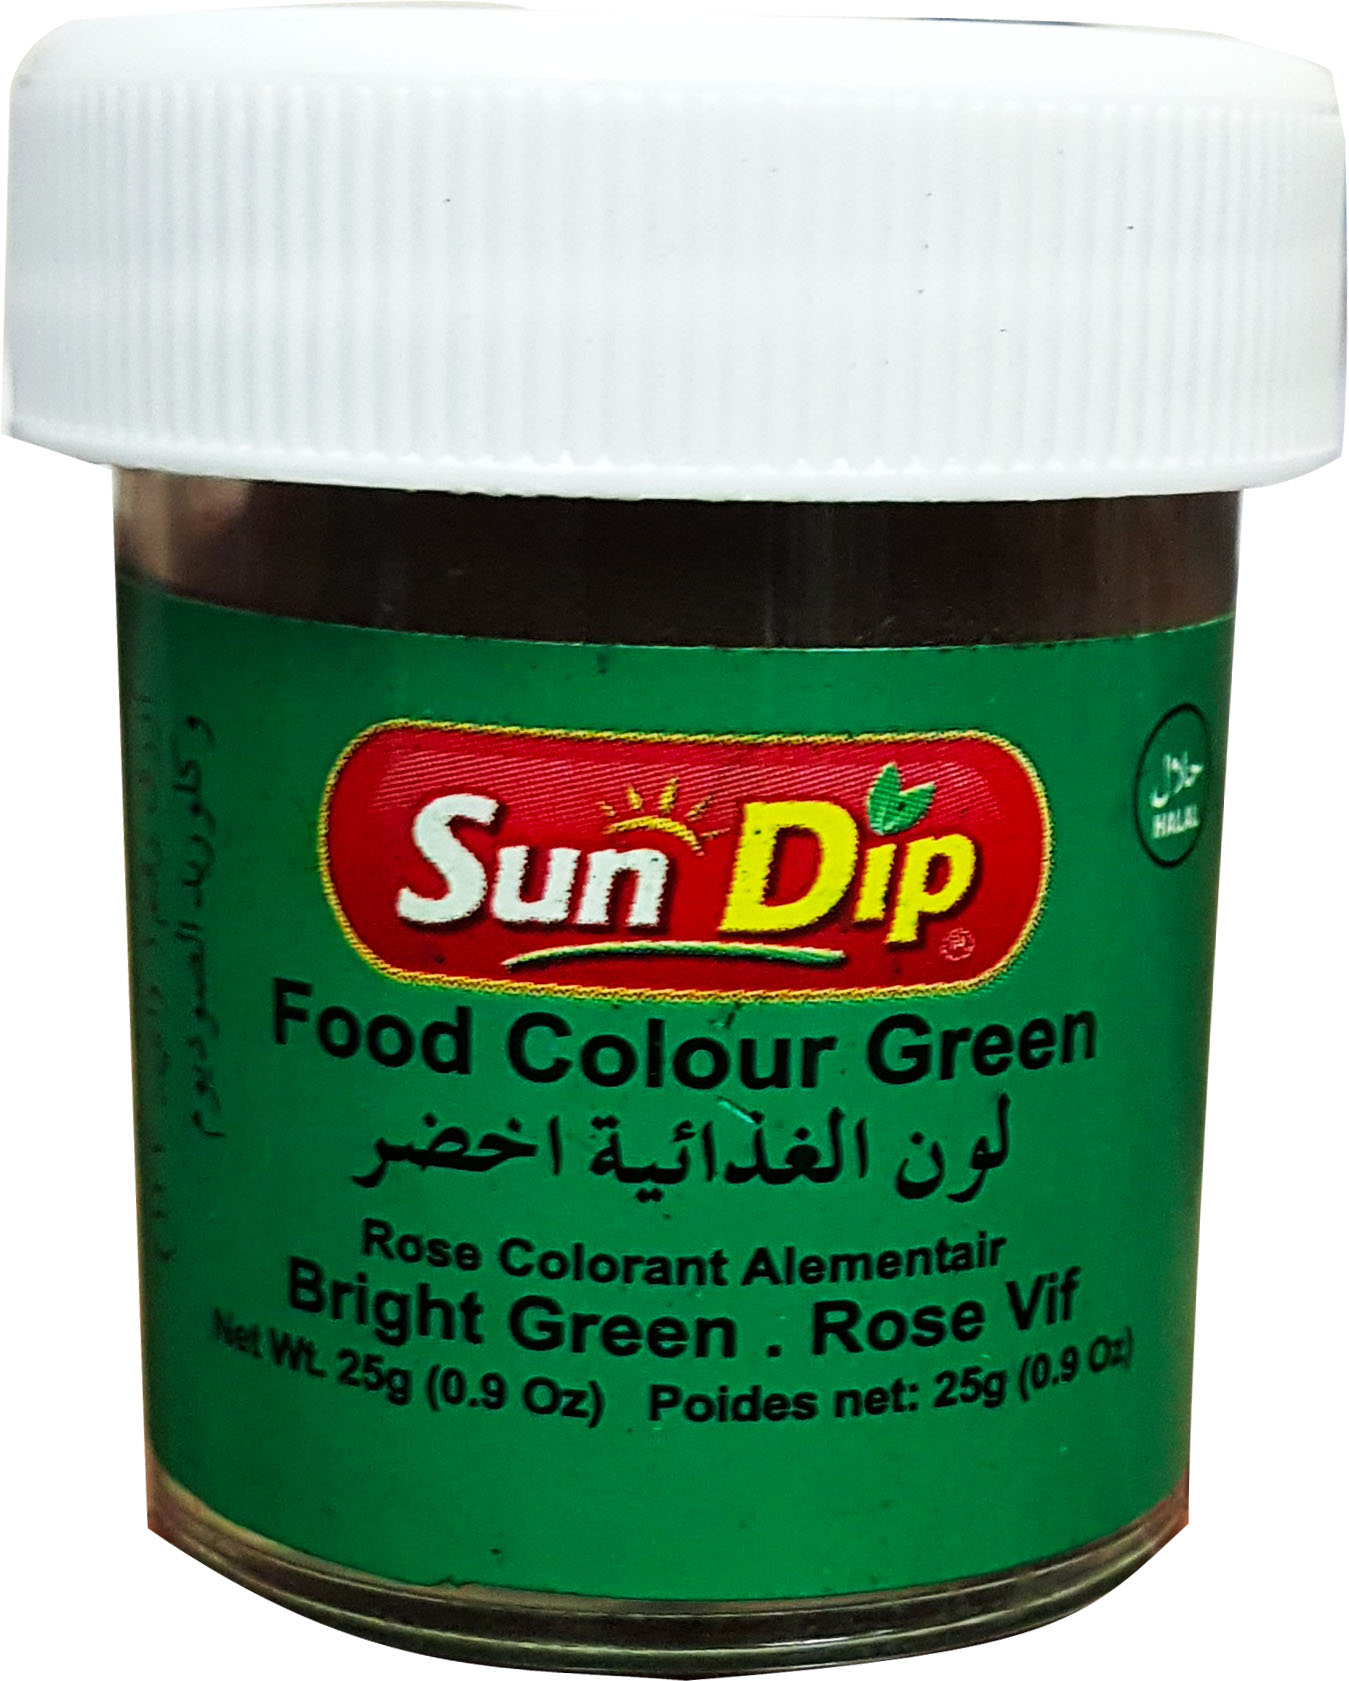 Sundip Food Colour Green